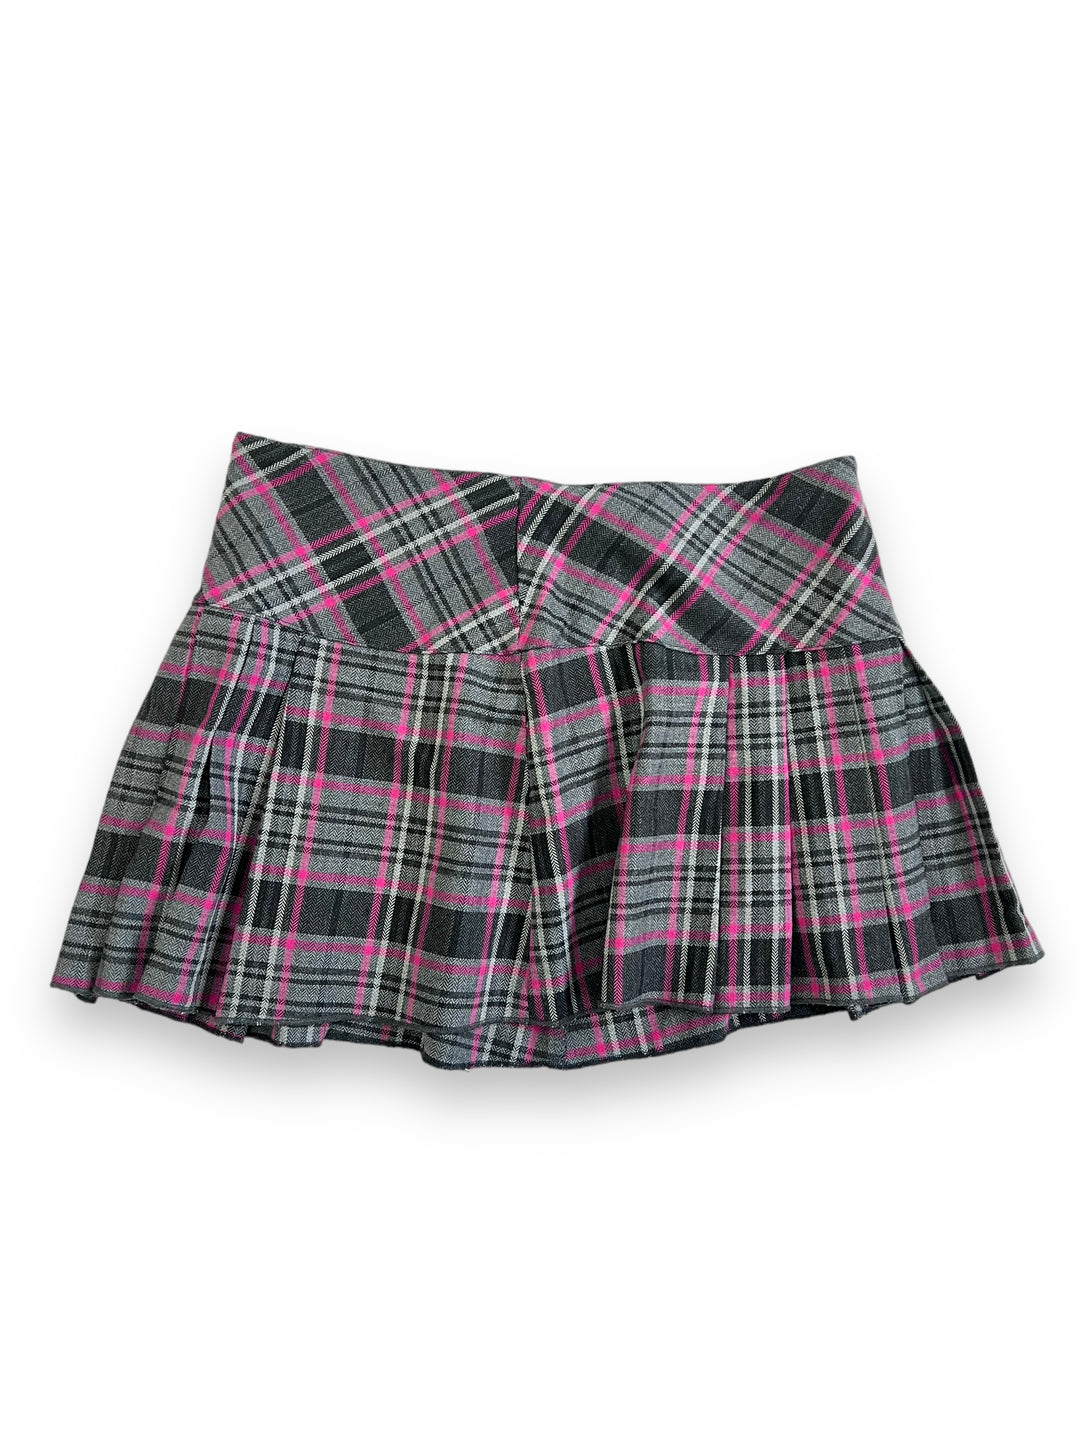 Denny Rose Plaid Mini Skirt Women's Small